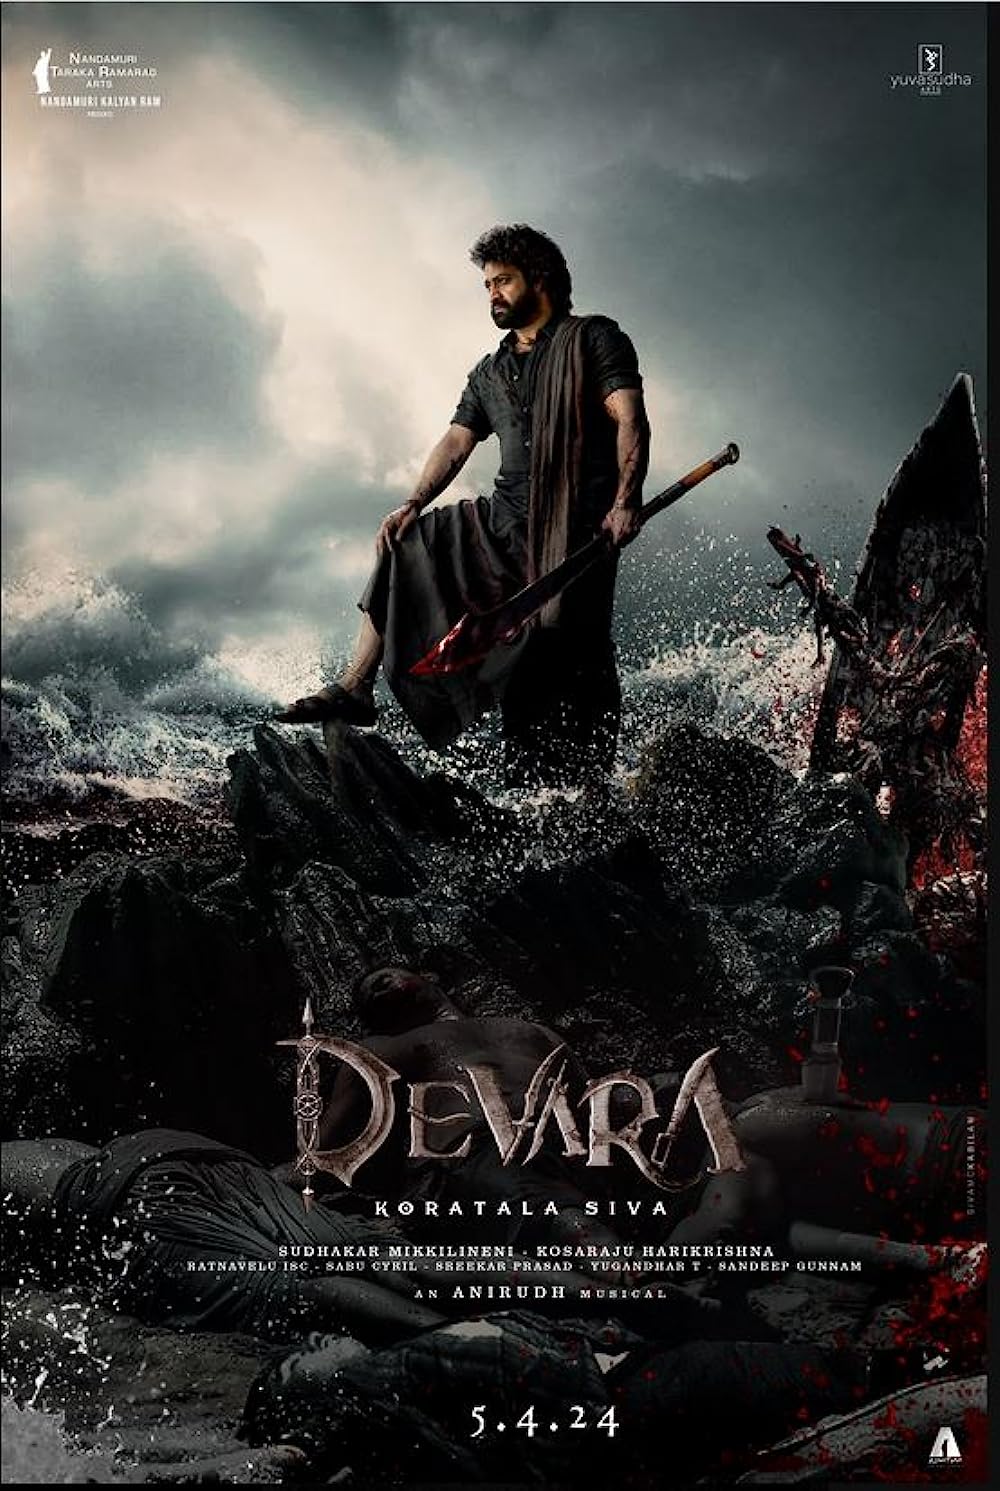 Devara Movie Review